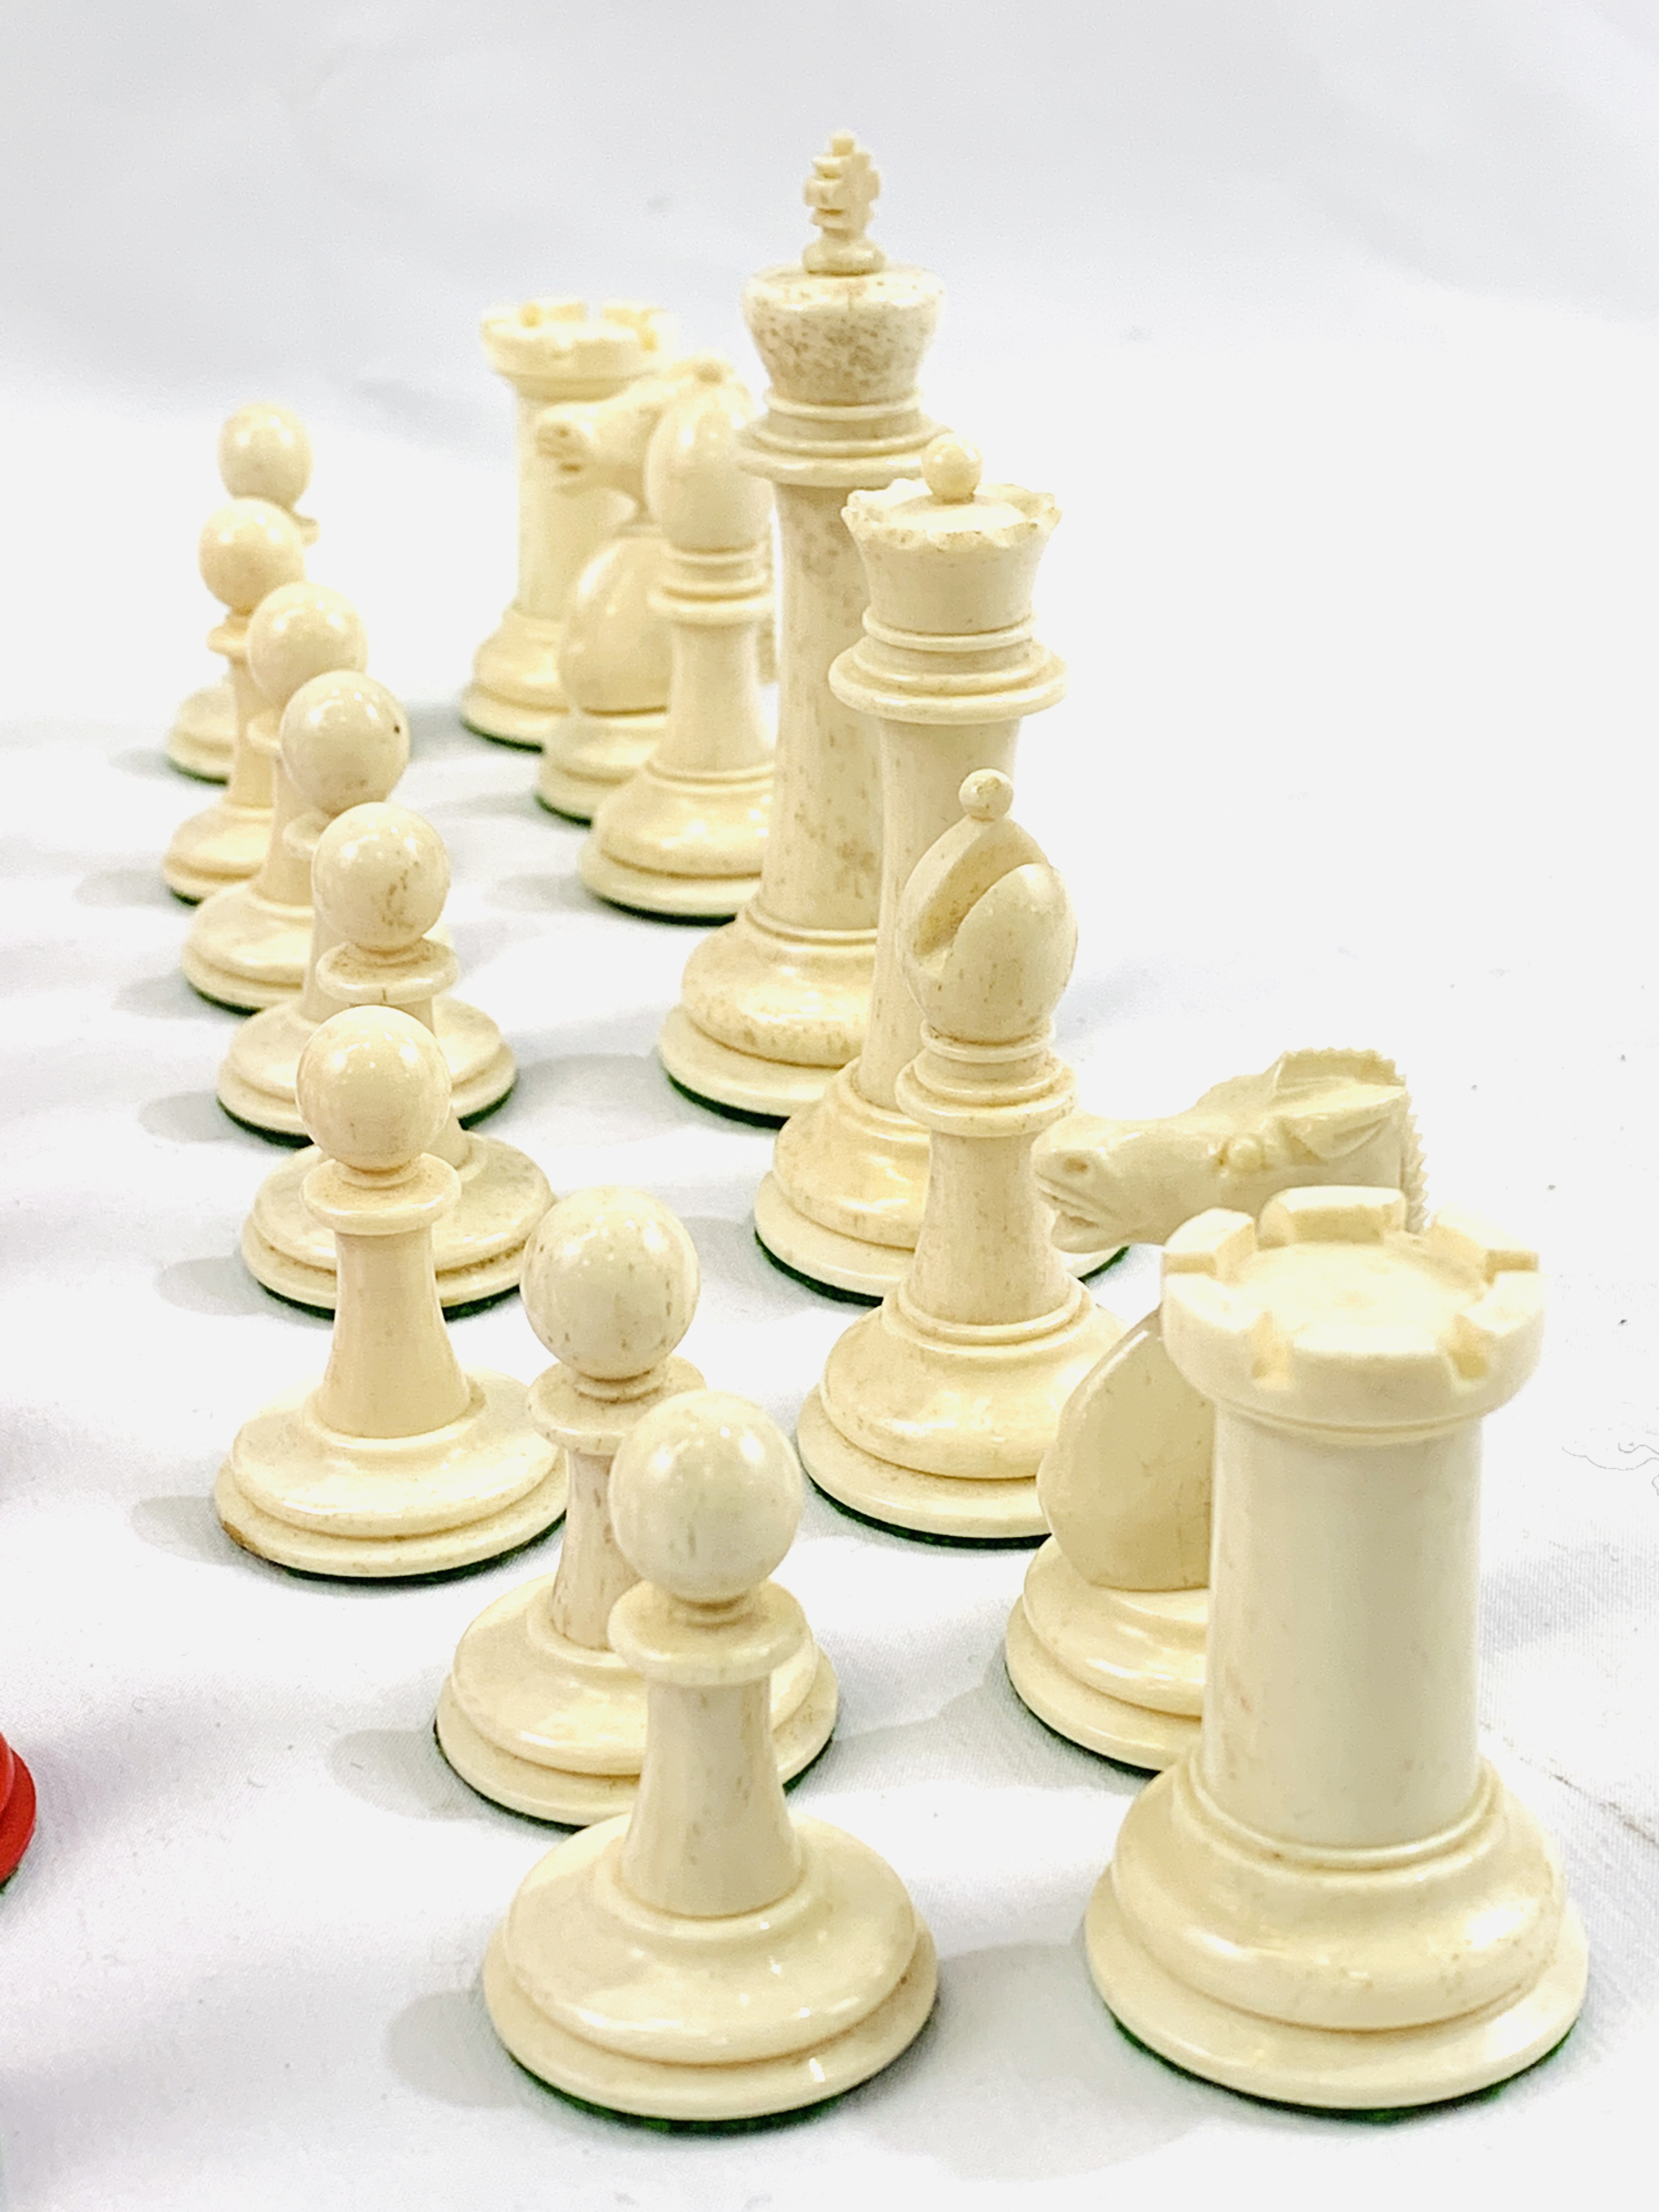 Bone chess set - Image 7 of 7